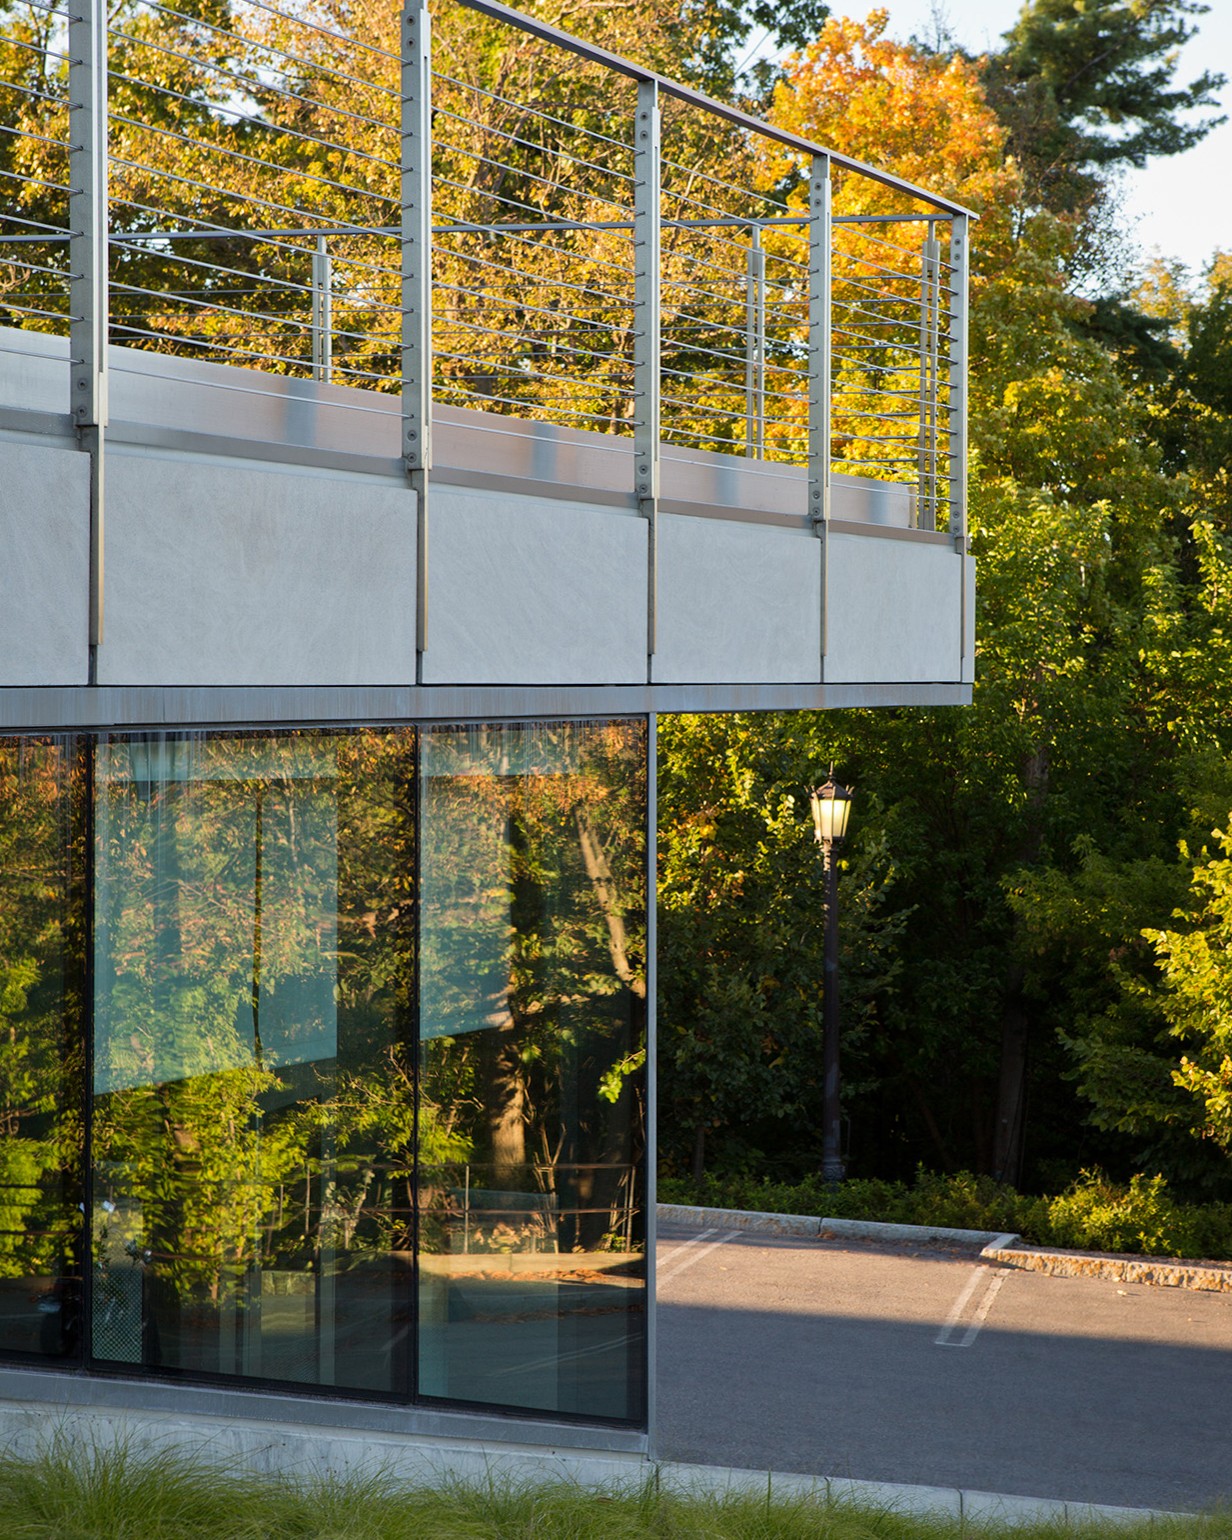 The glass façade reflects the surrounding fall foliage